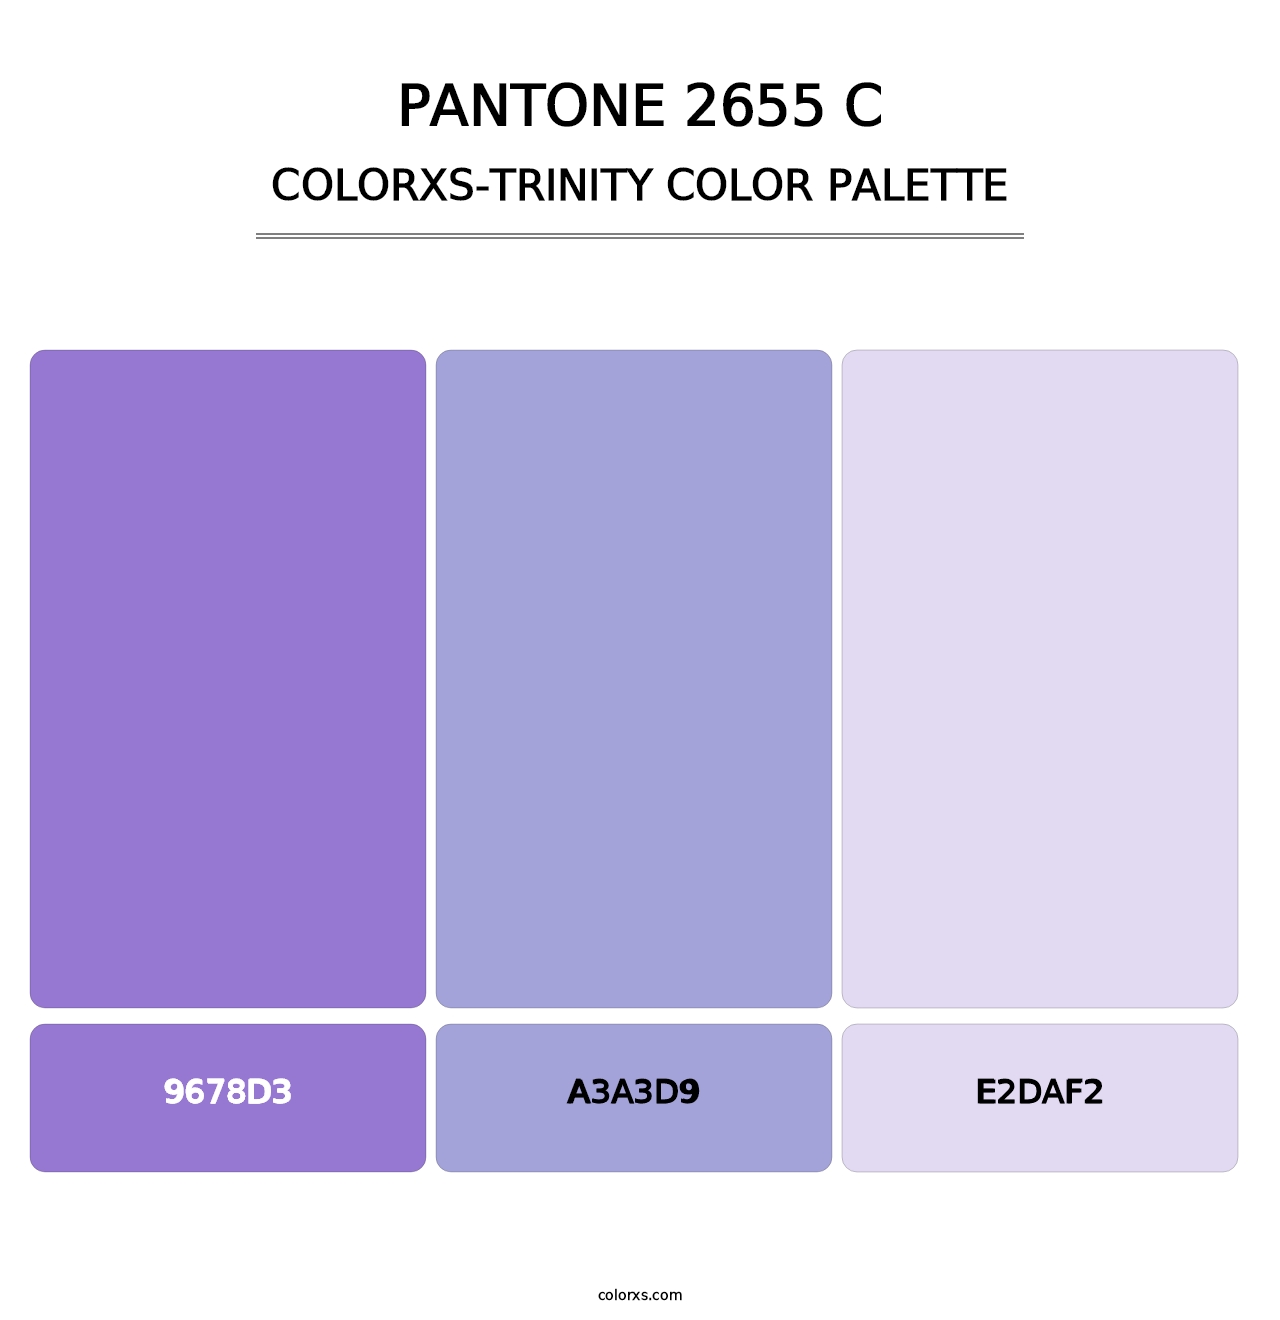 PANTONE 2655 C - Colorxs Trinity Palette